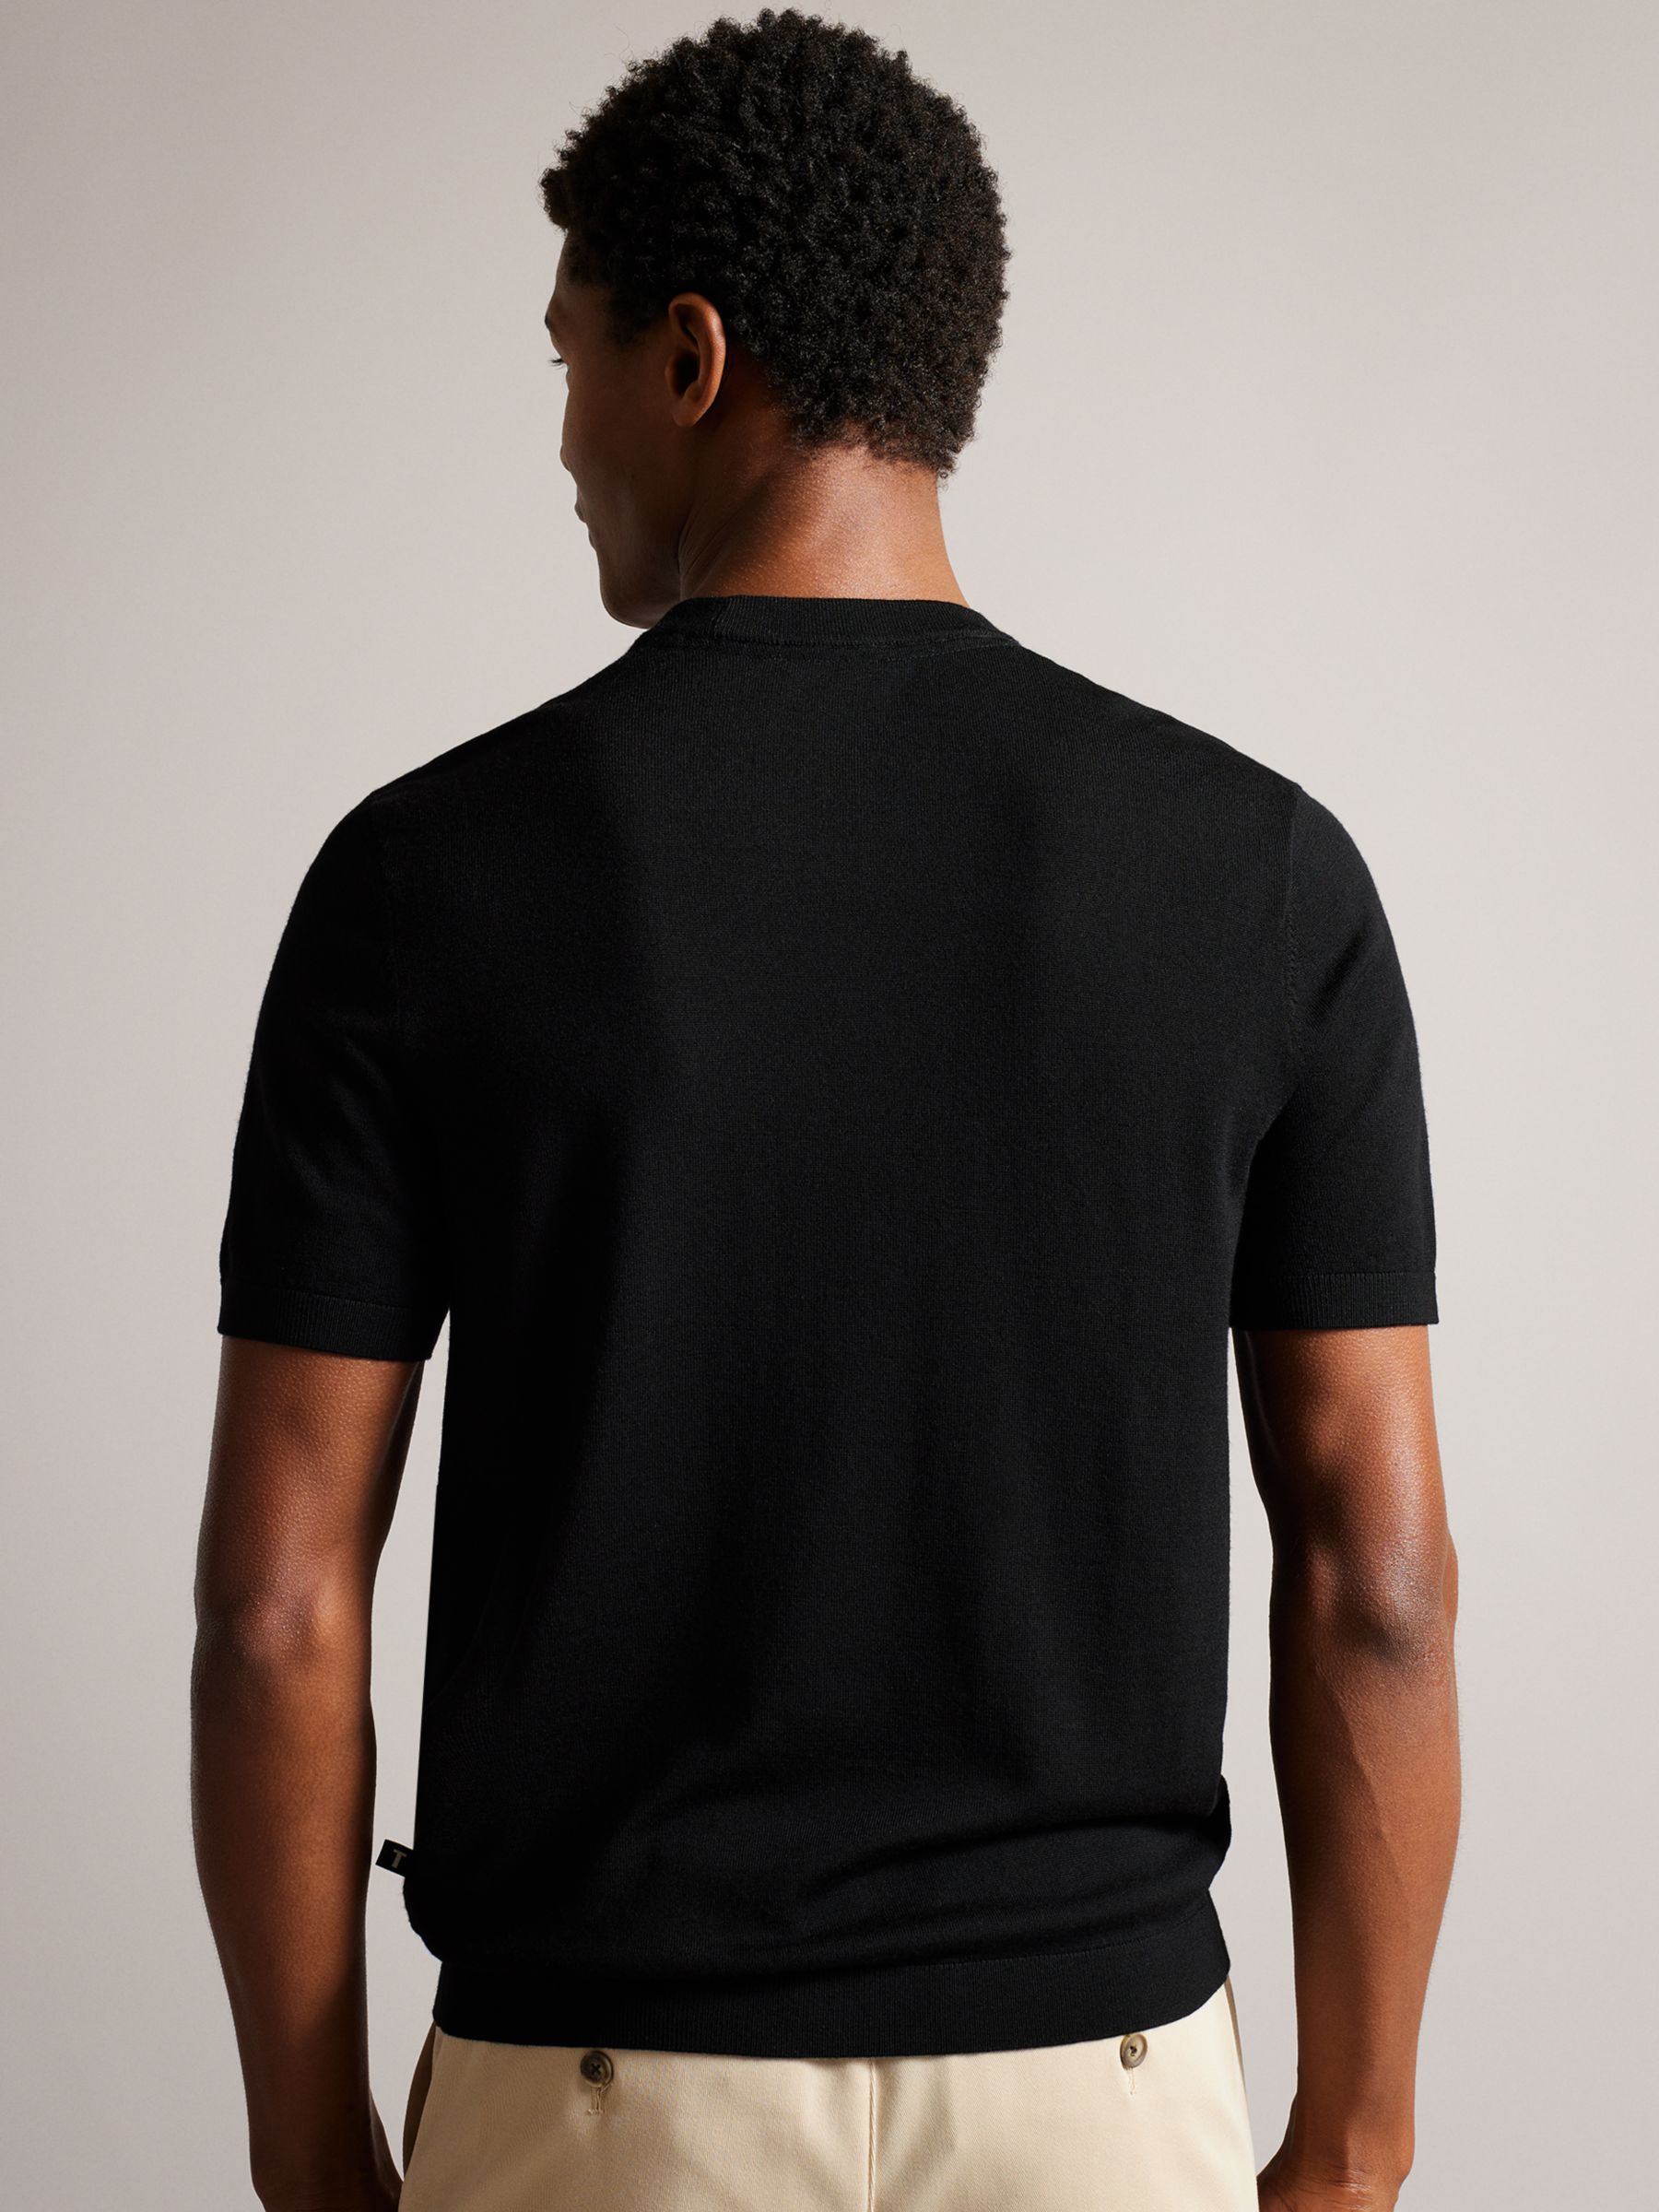 Ted Baker Senti Wool Short Sleeve Knitted T-Shirt, Black, XS